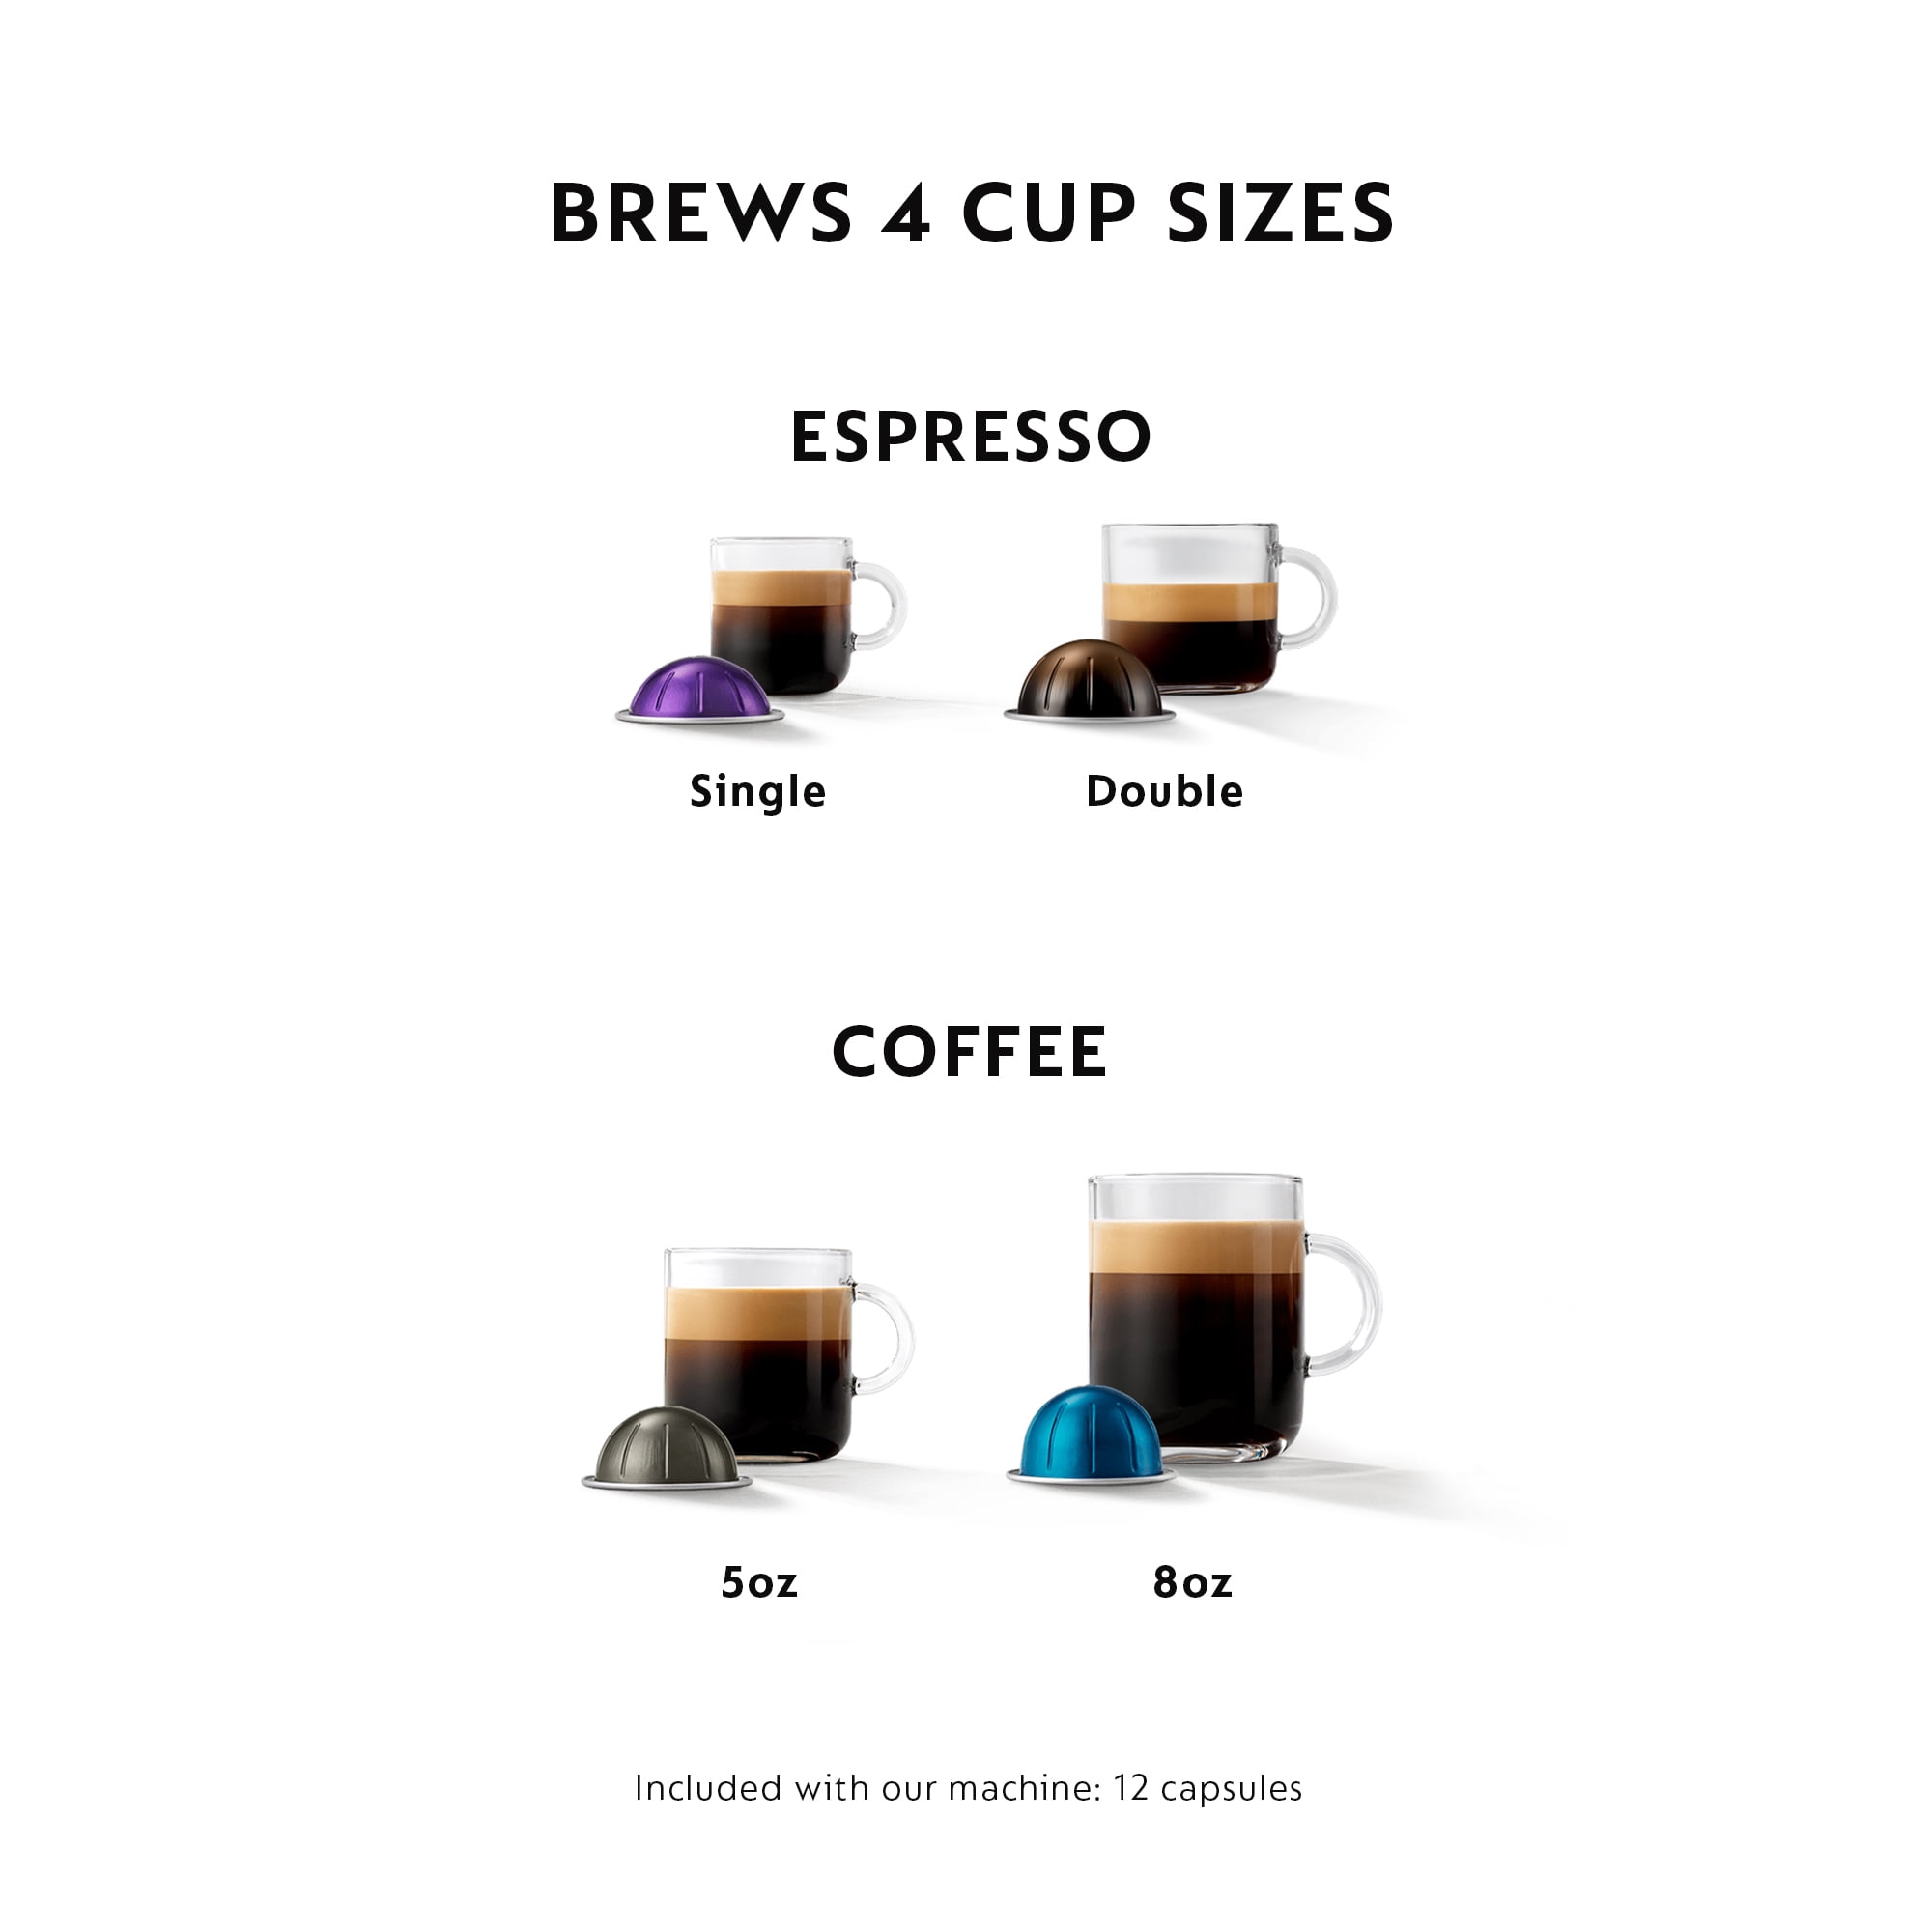 Cafetera de cápsulas - KRUPS Nespresso Vertuo Plus XN9038, 19 bar